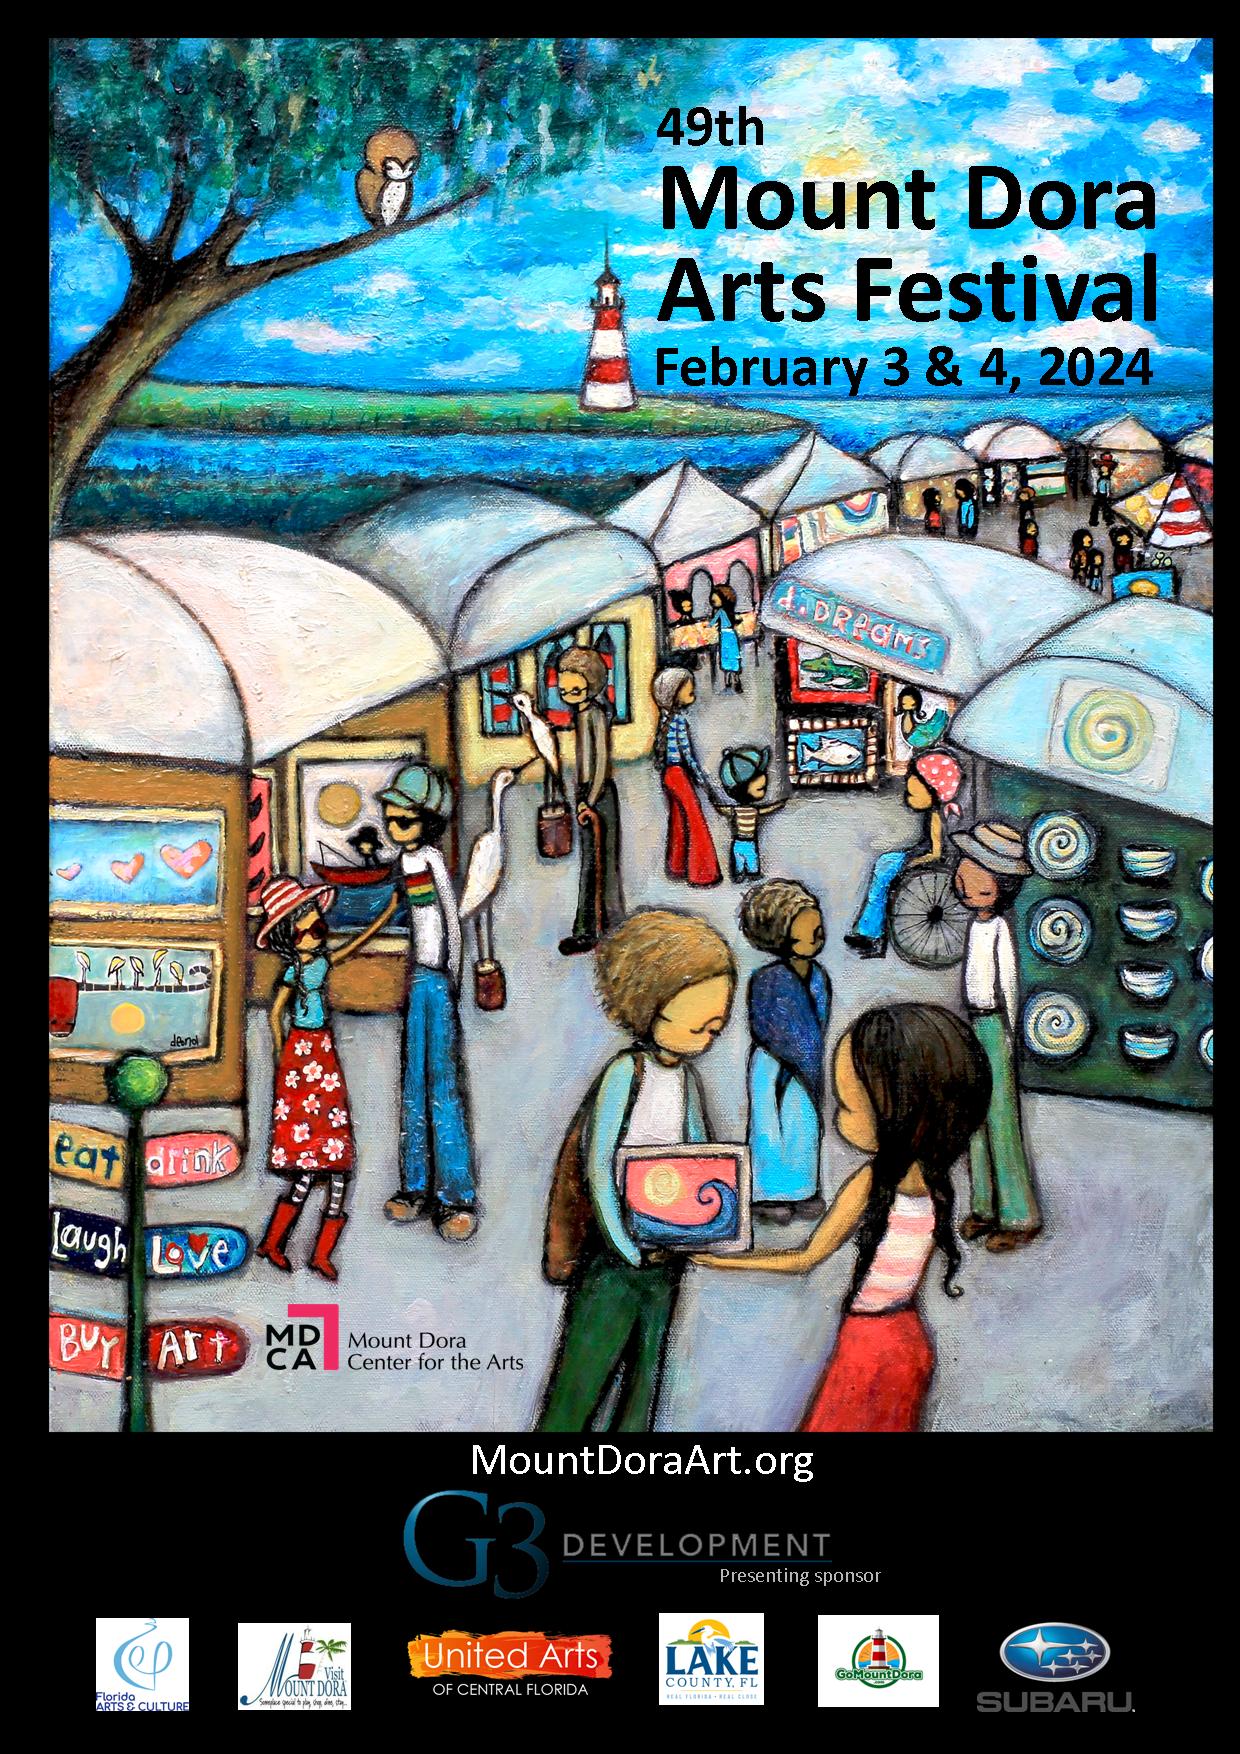 Mount Dora Arts Festival